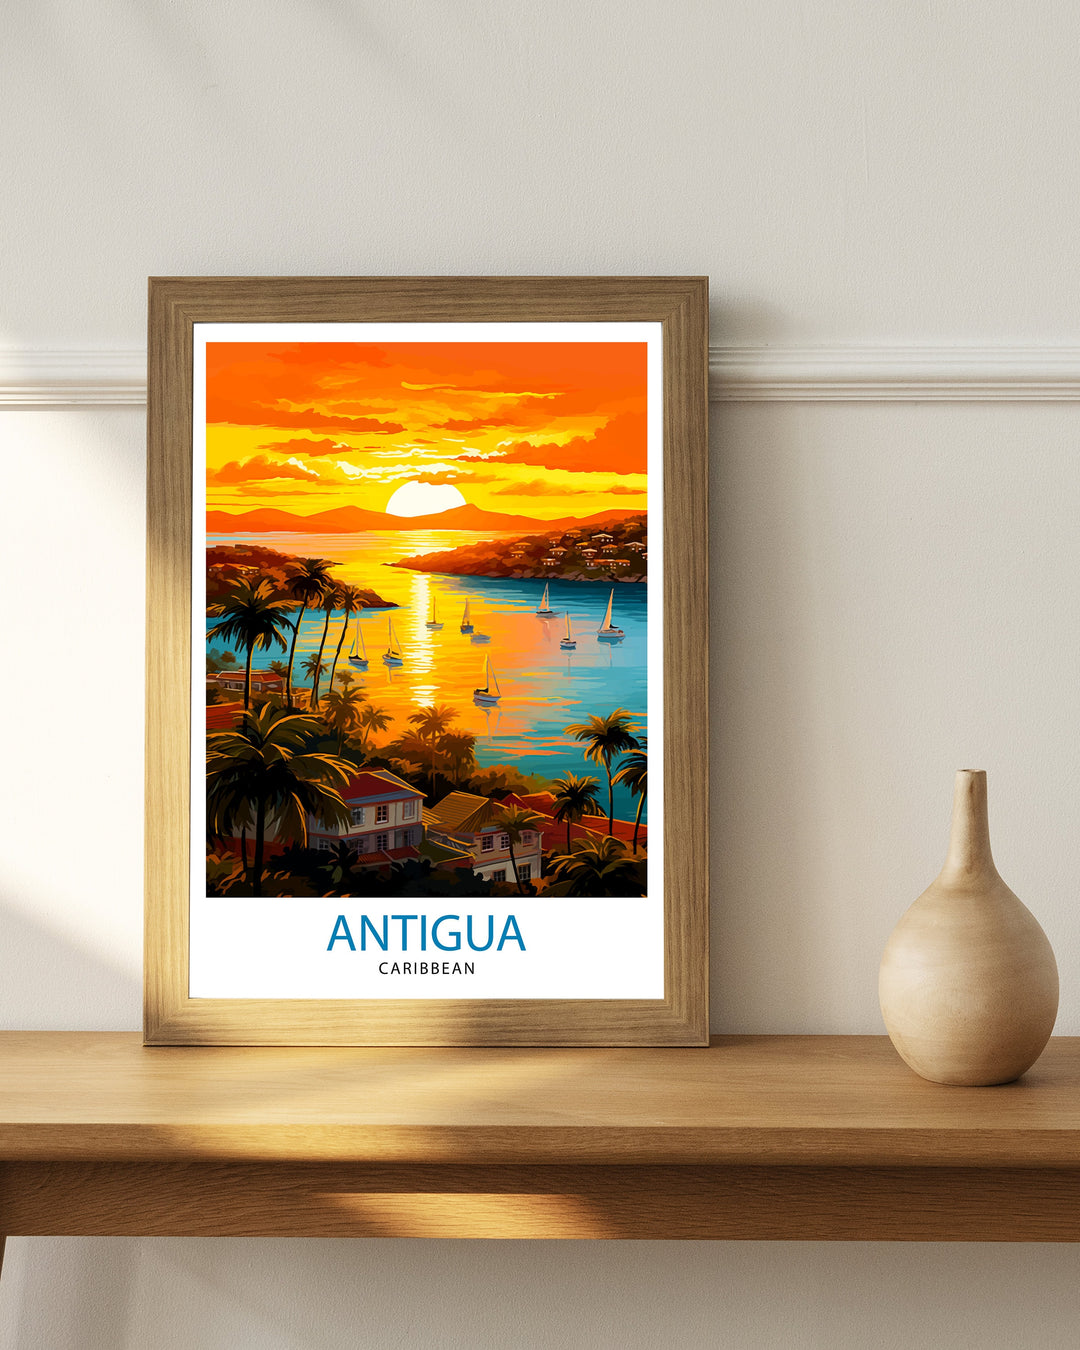 Antigua Travel Poster | Antigua Poster